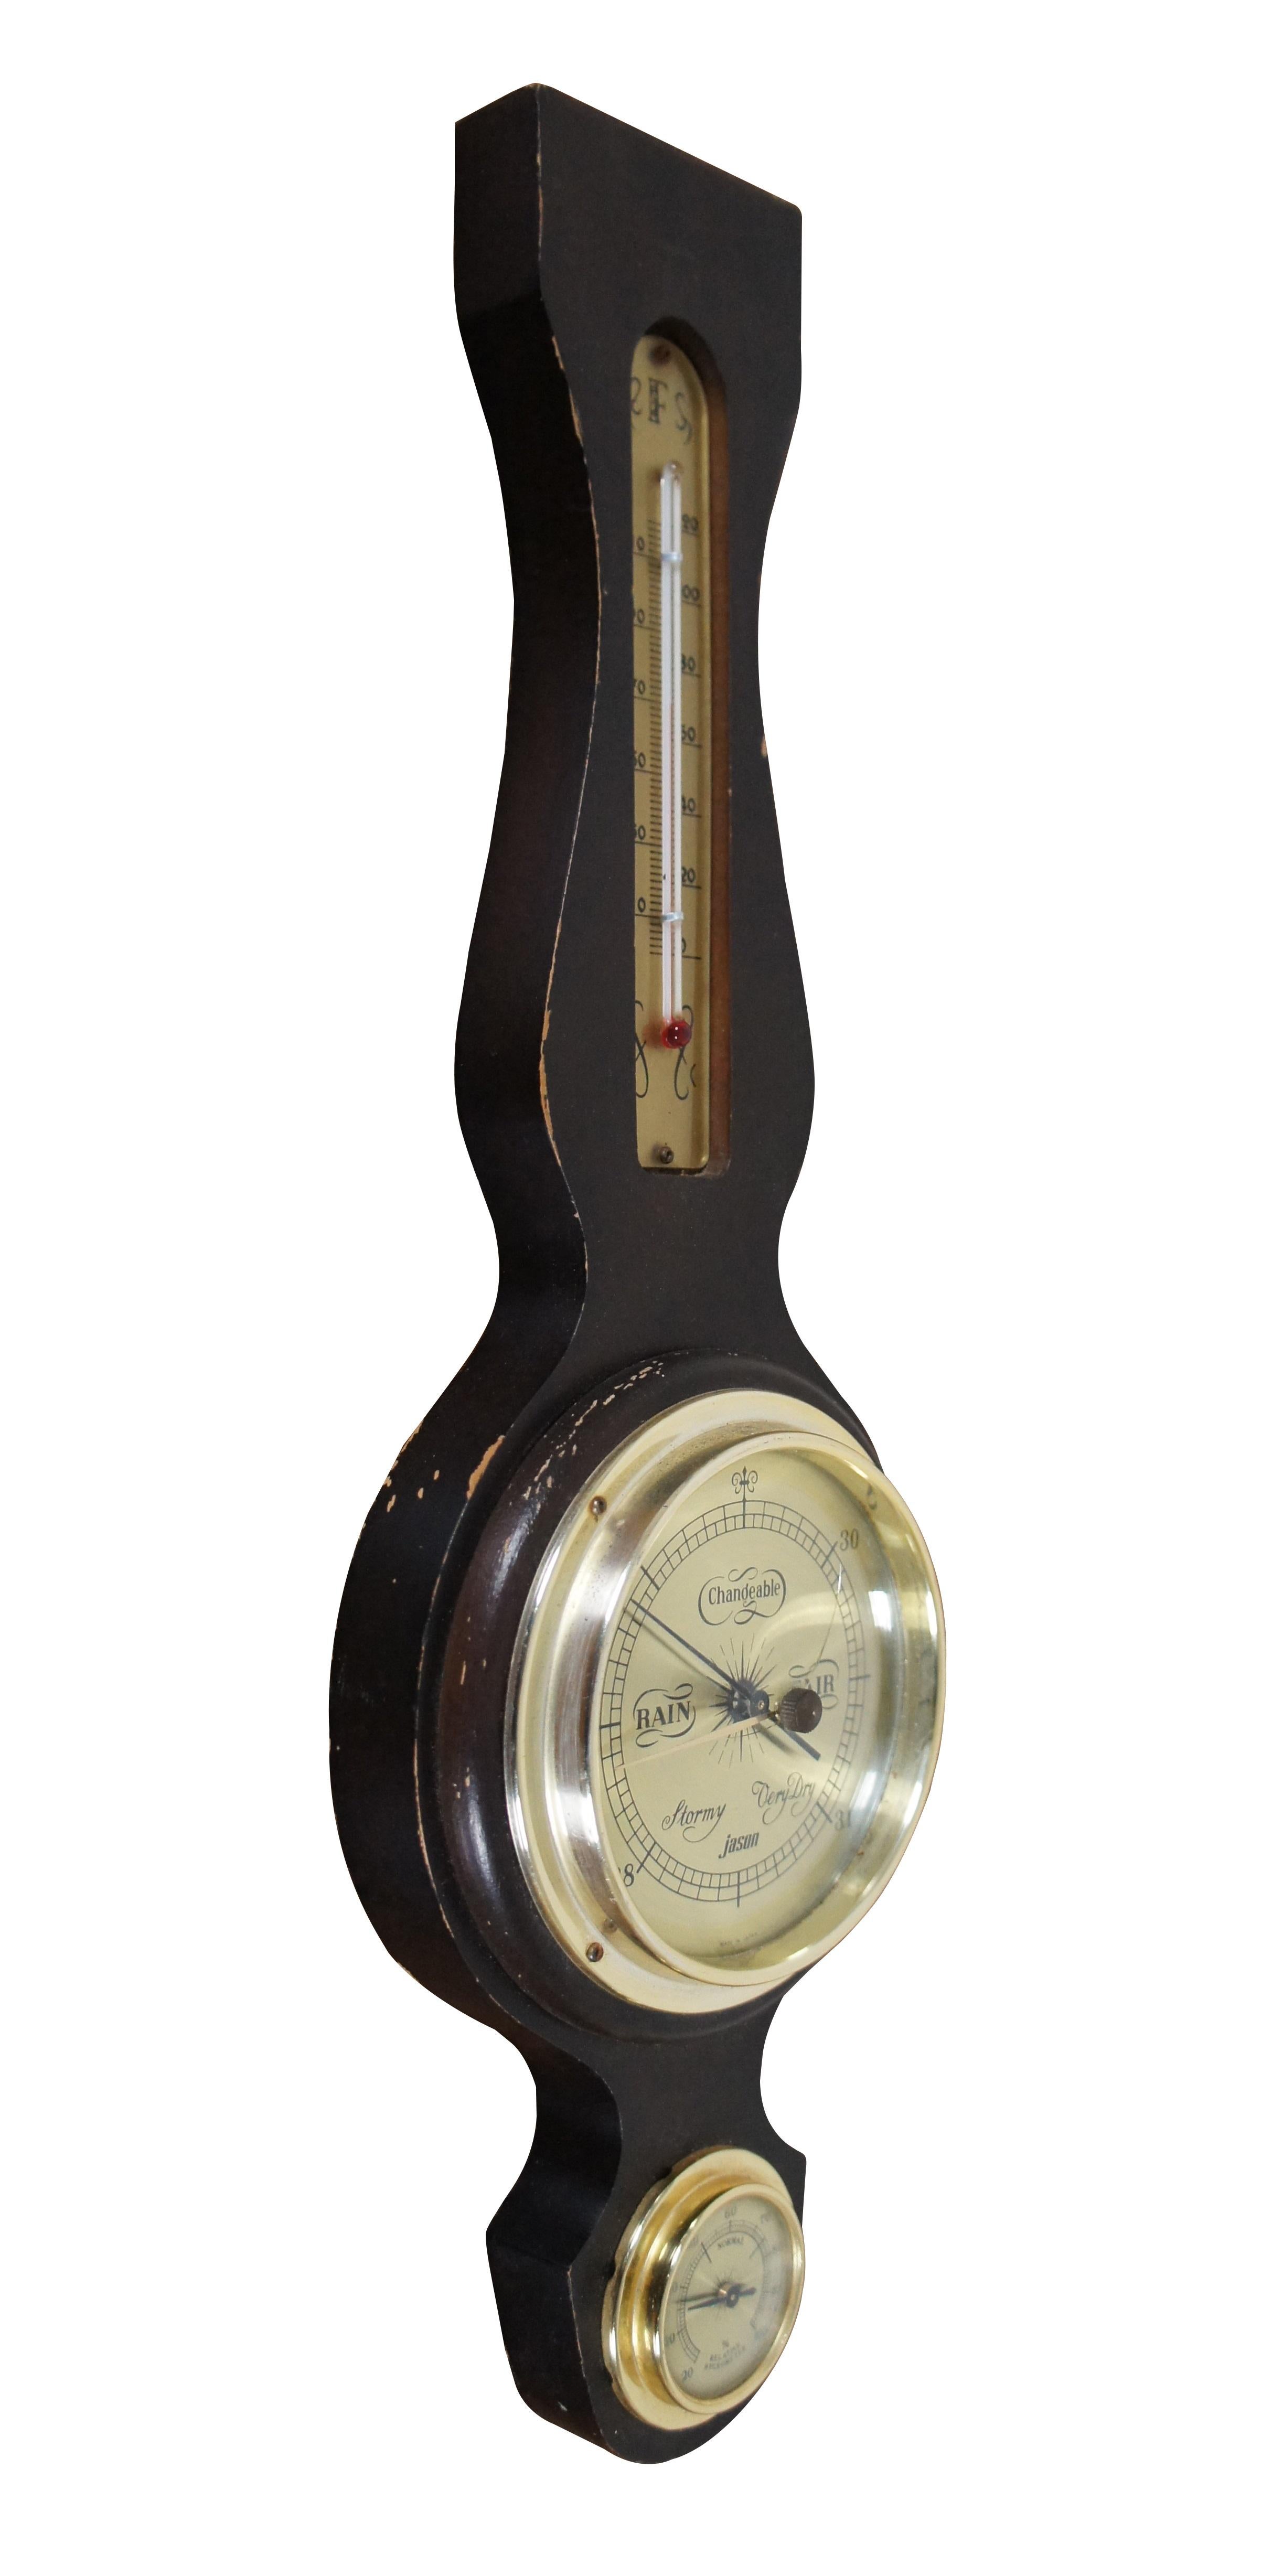 Vintge Jason banjo barometer / hygrometer / thermometer humidity weather station.

Dimensions
5.5